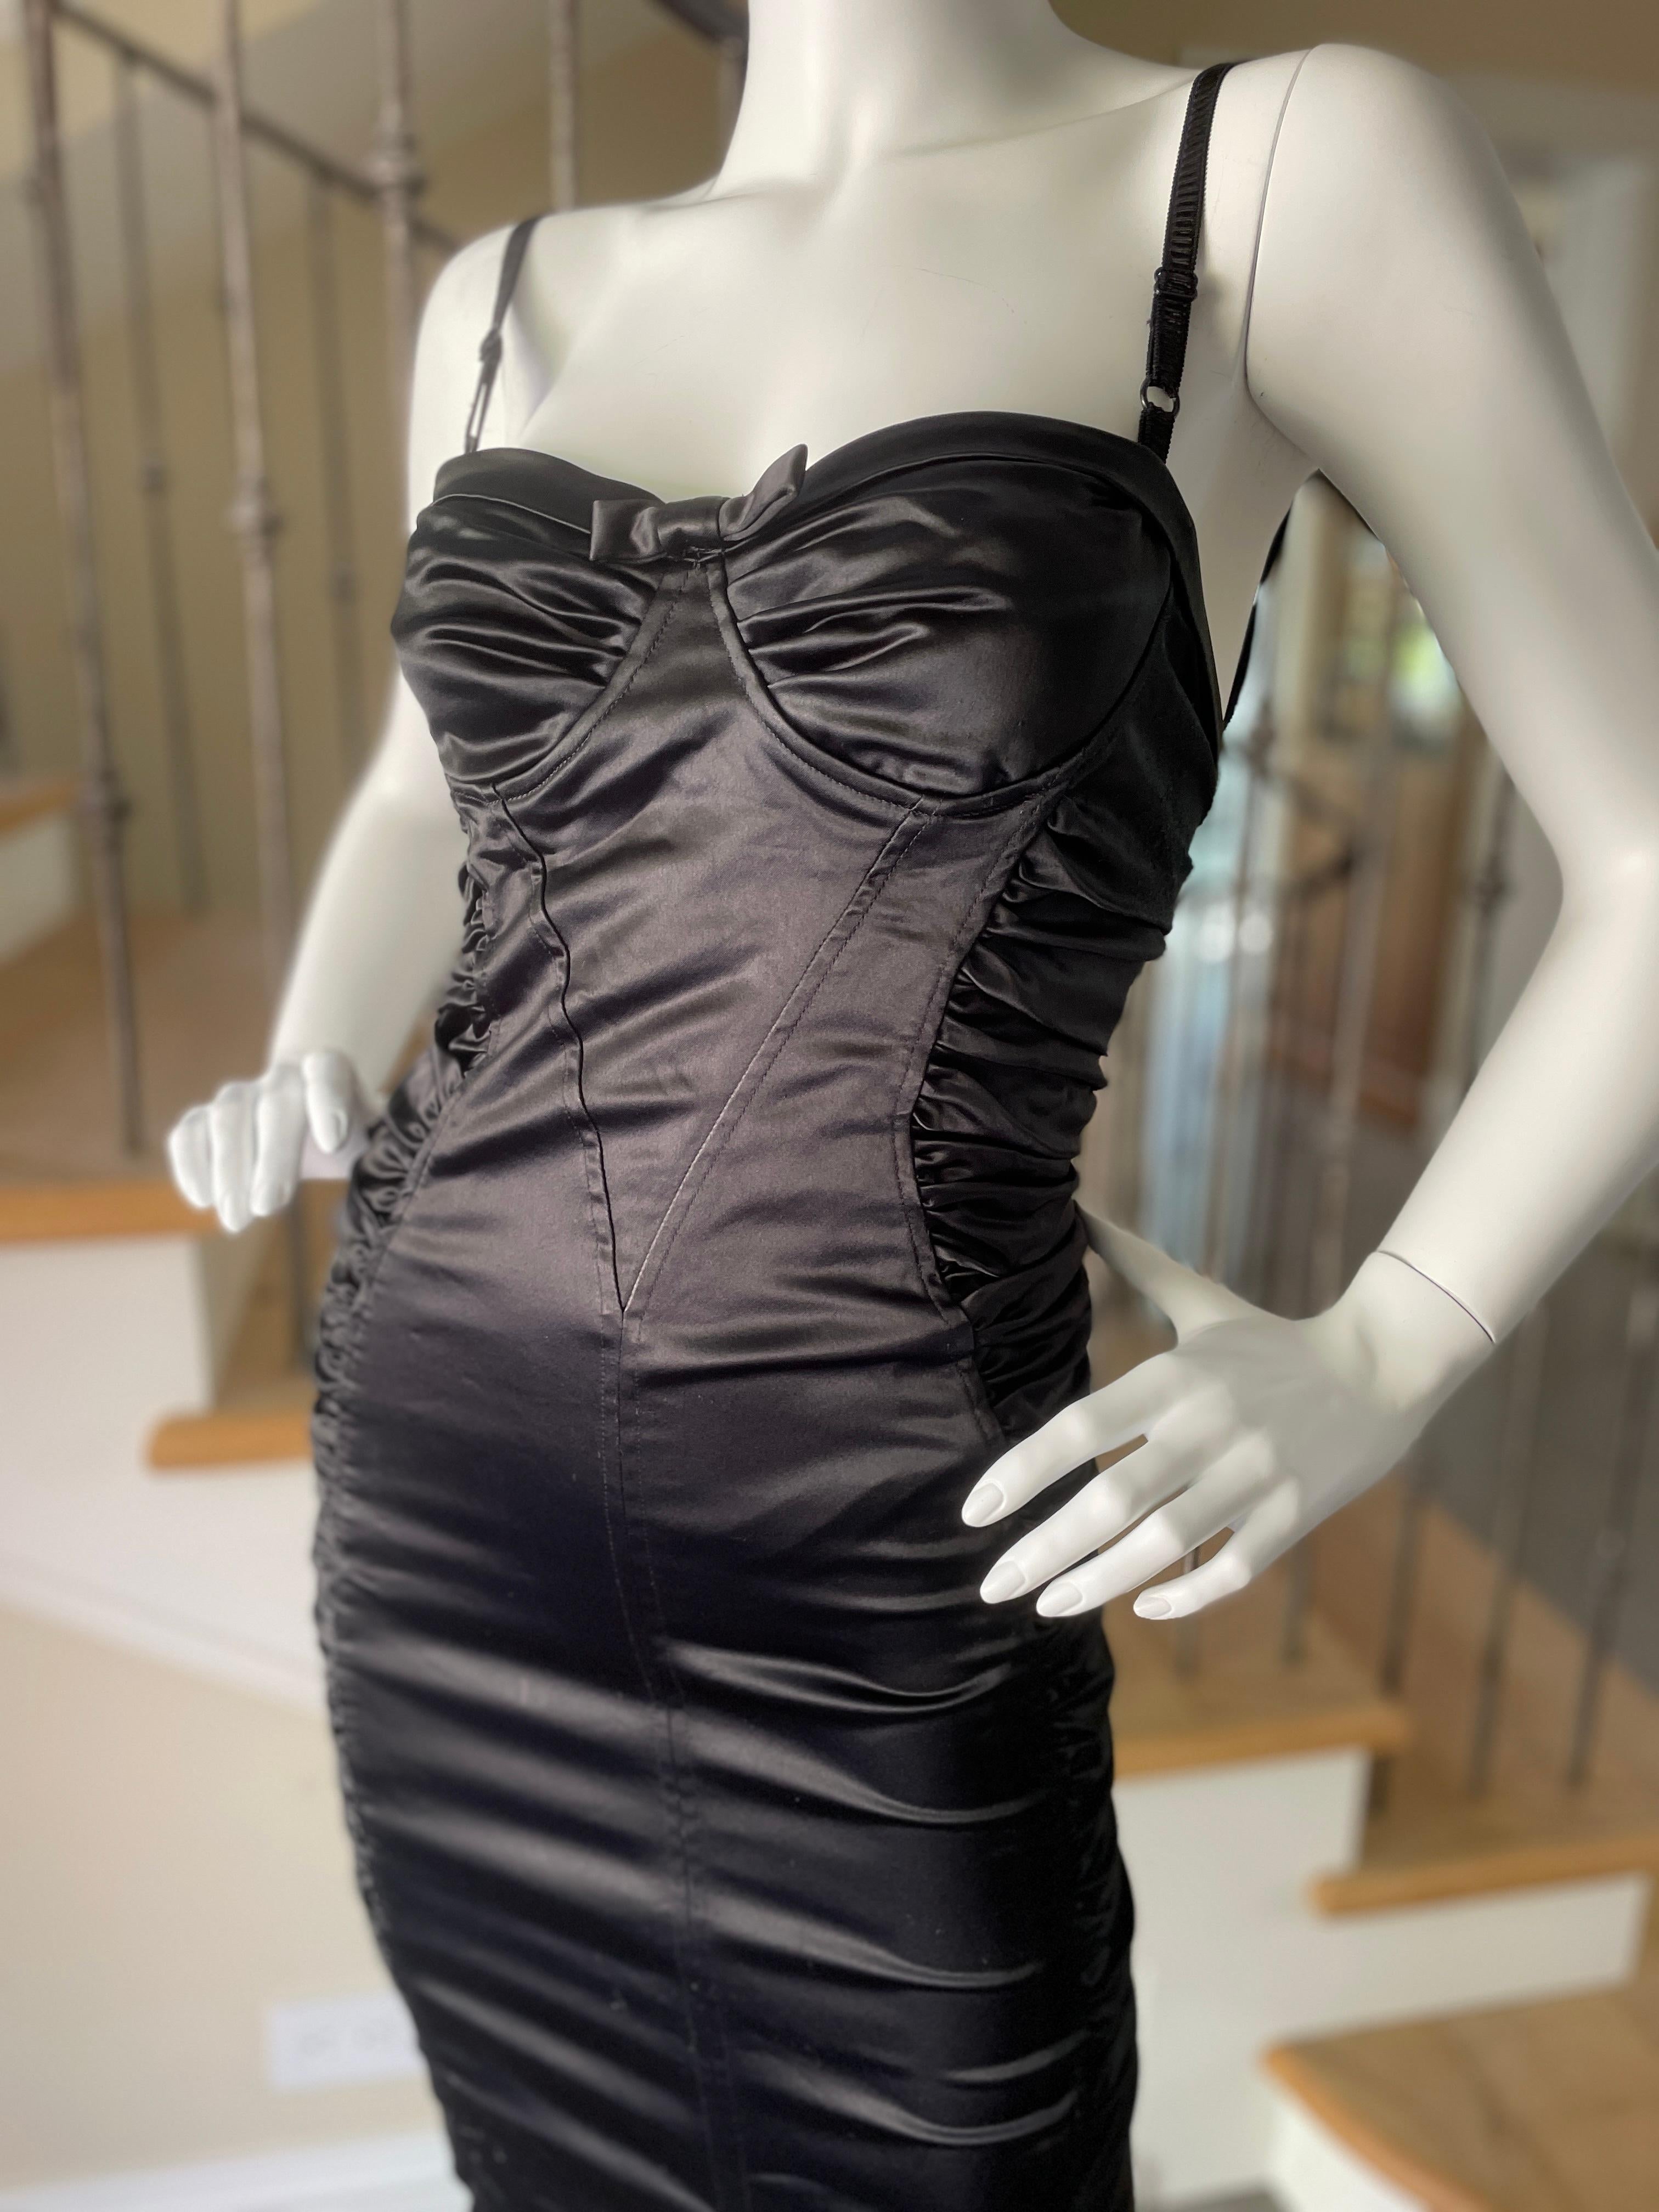 D&G Vintage Ruched Black Cocktail Dress w Underwire Bra by Dolce & Gabbana For Sale 1